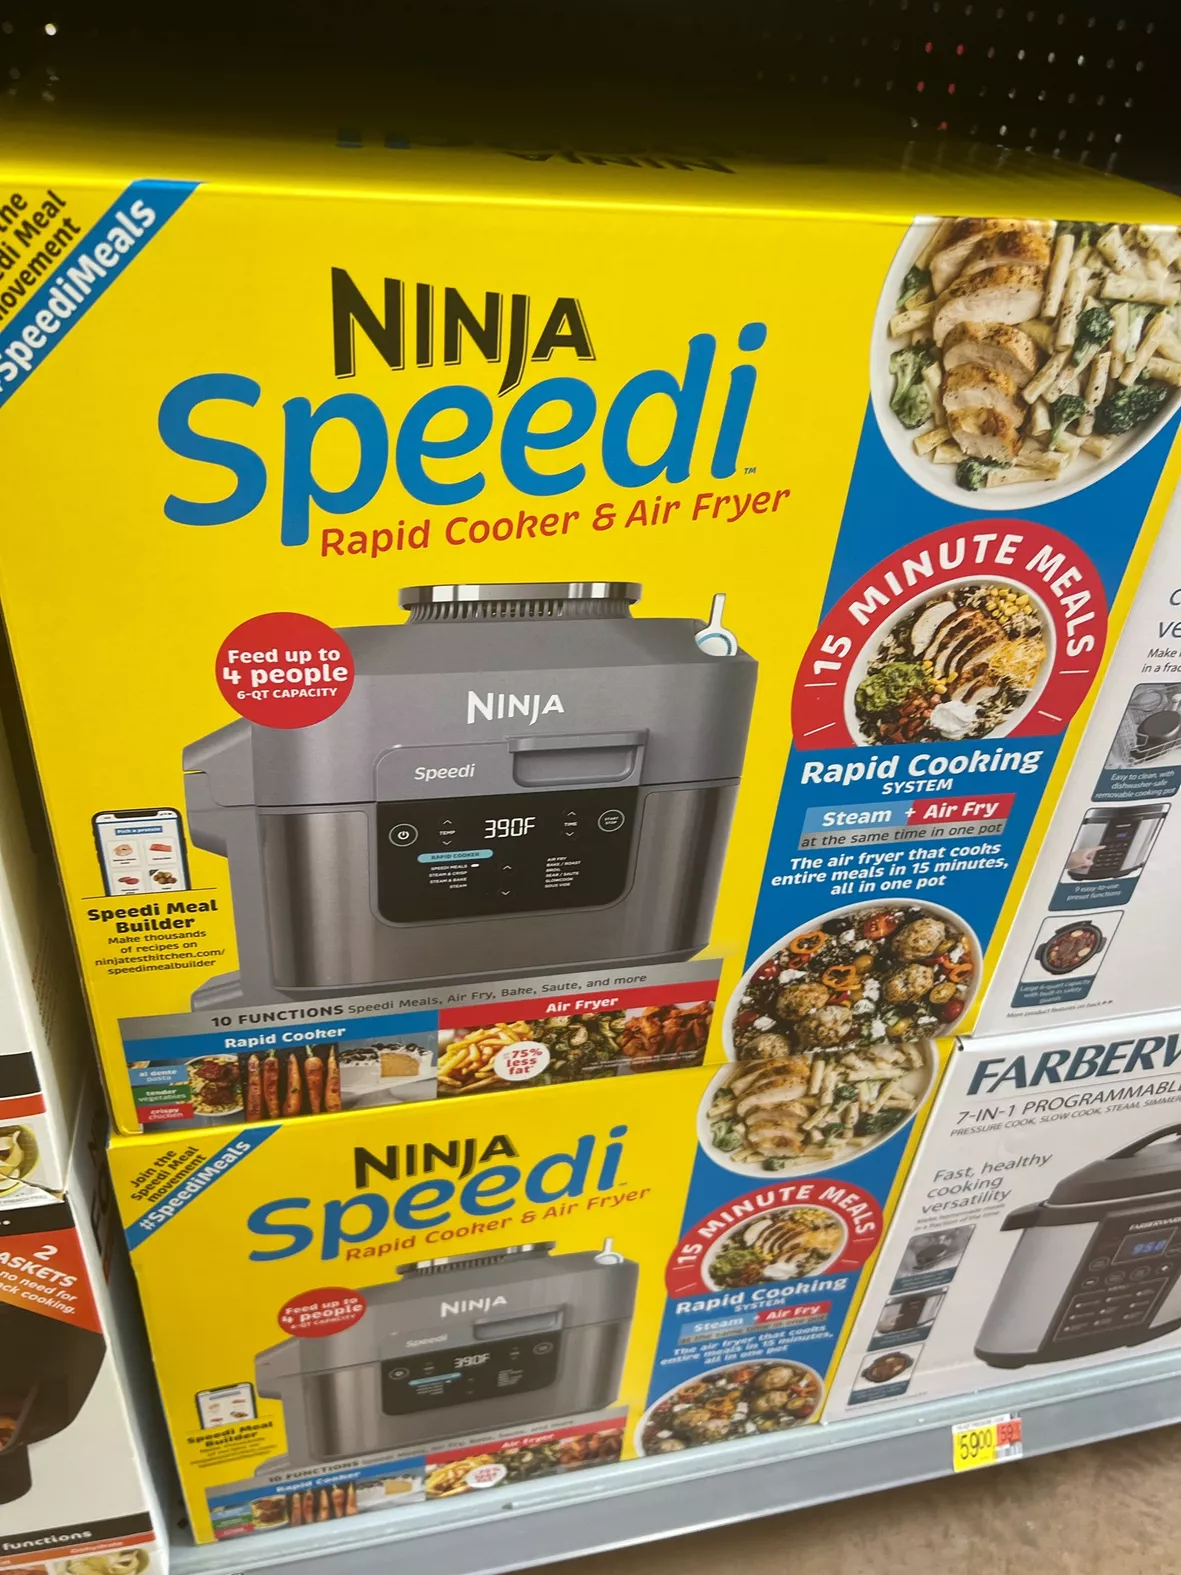 Ninja Speedi Rapid Cooker 